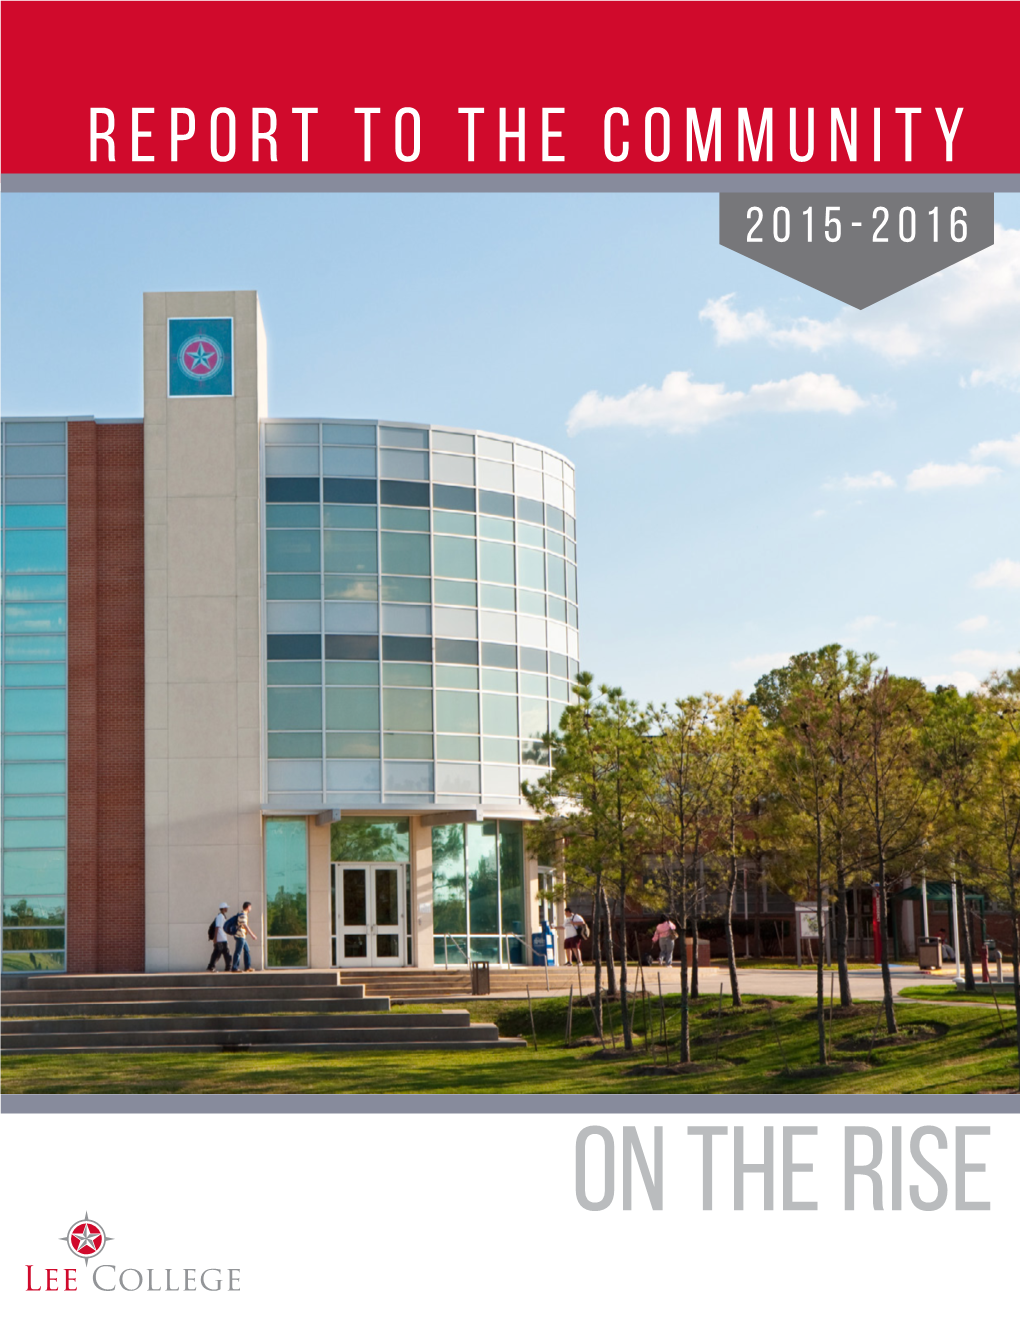 Annual Report, 2015-2016